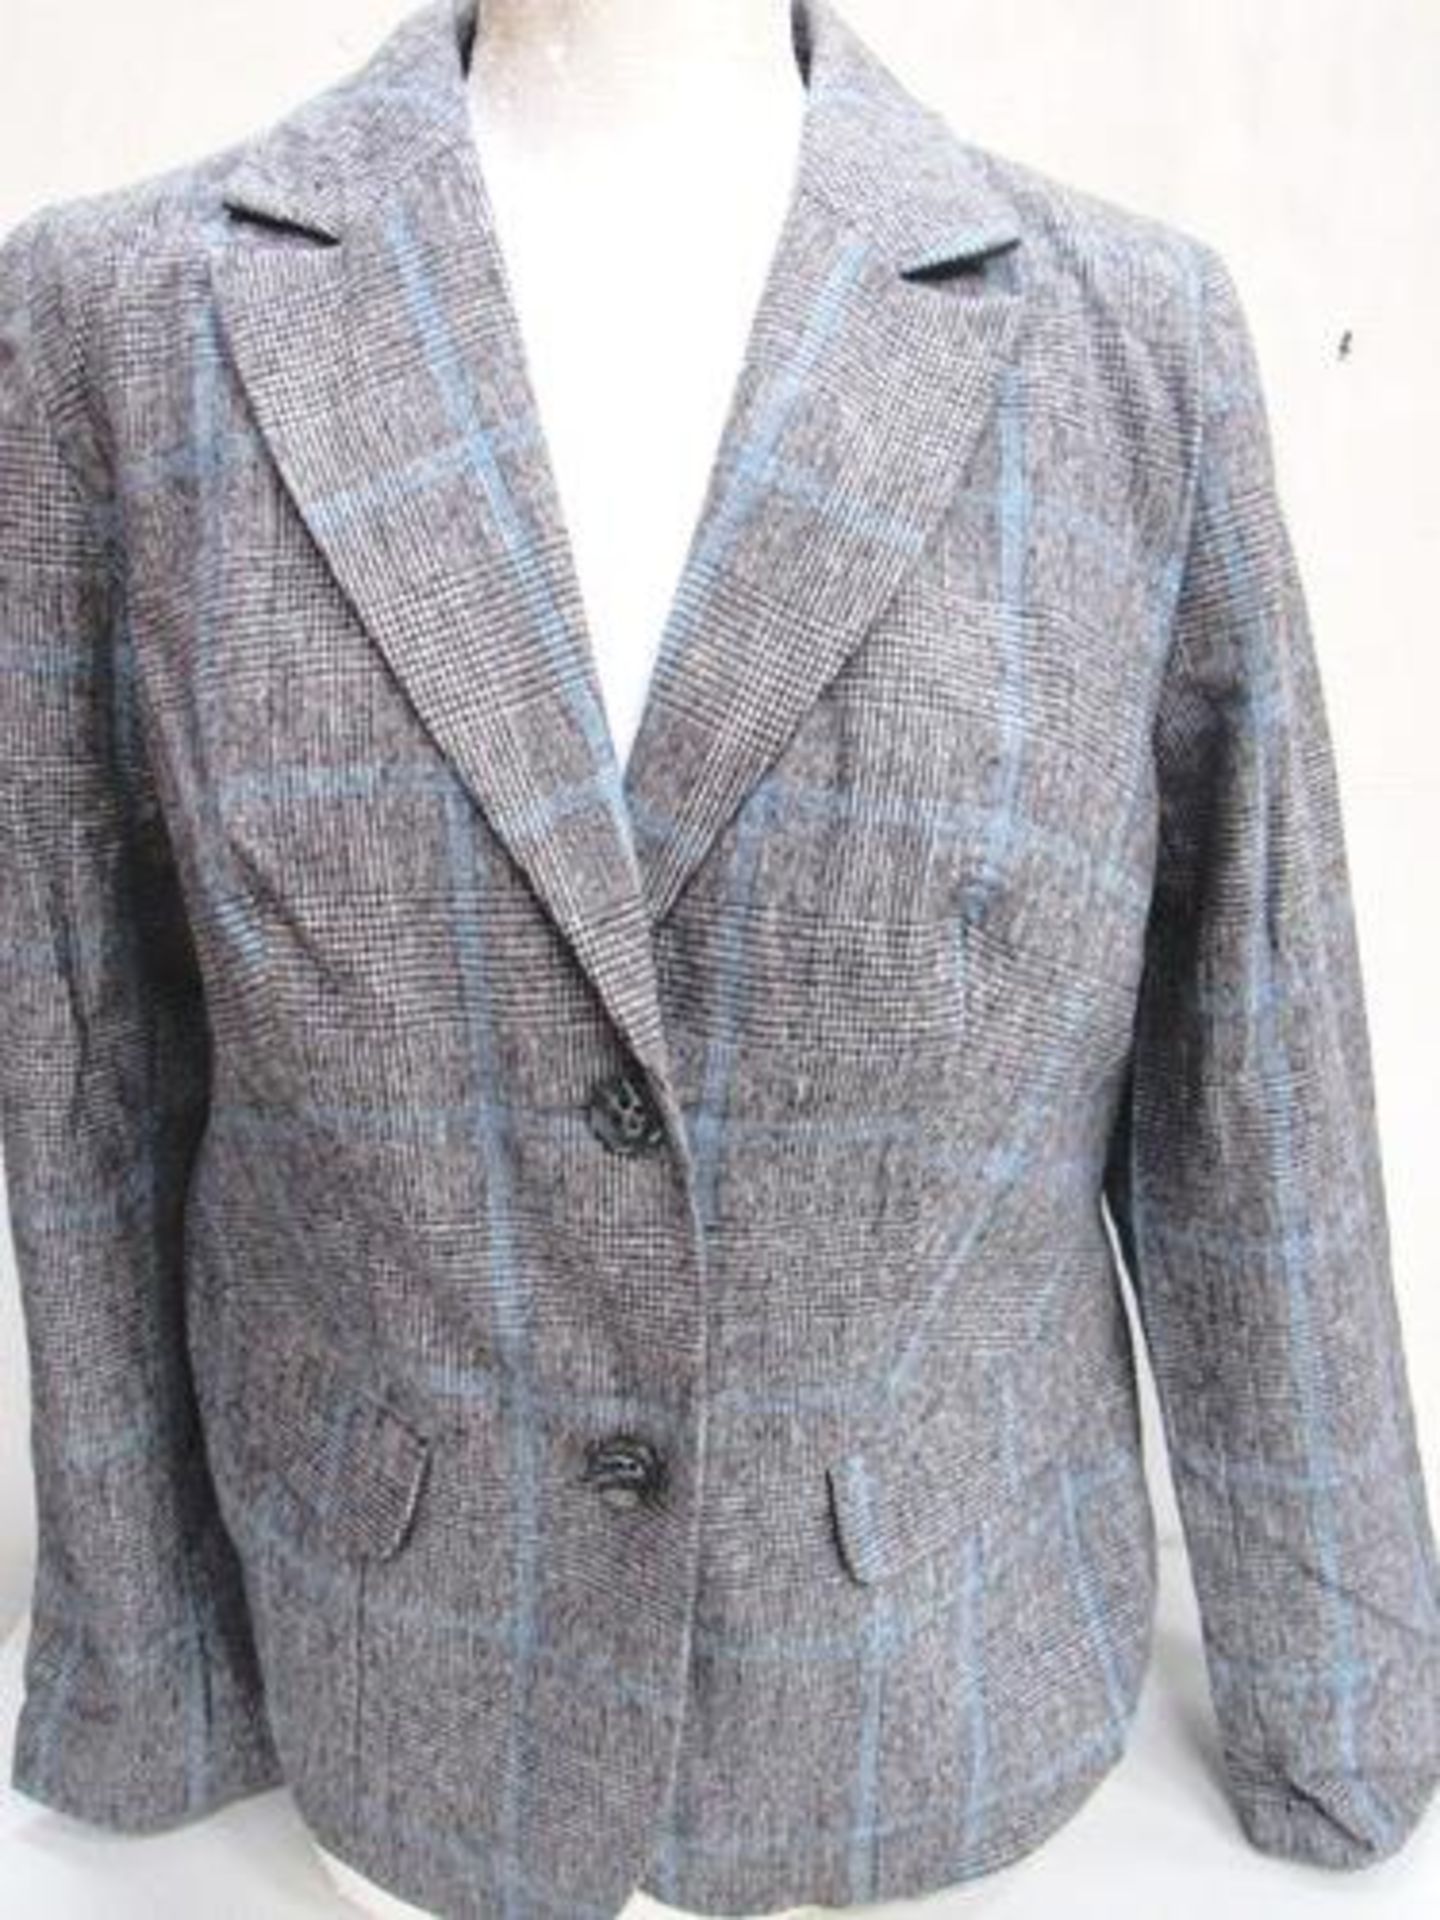 1 x Crewe ladies Penrhyn wool blazer, size 12, RRP £139.00 - Sealed new in box (1B)